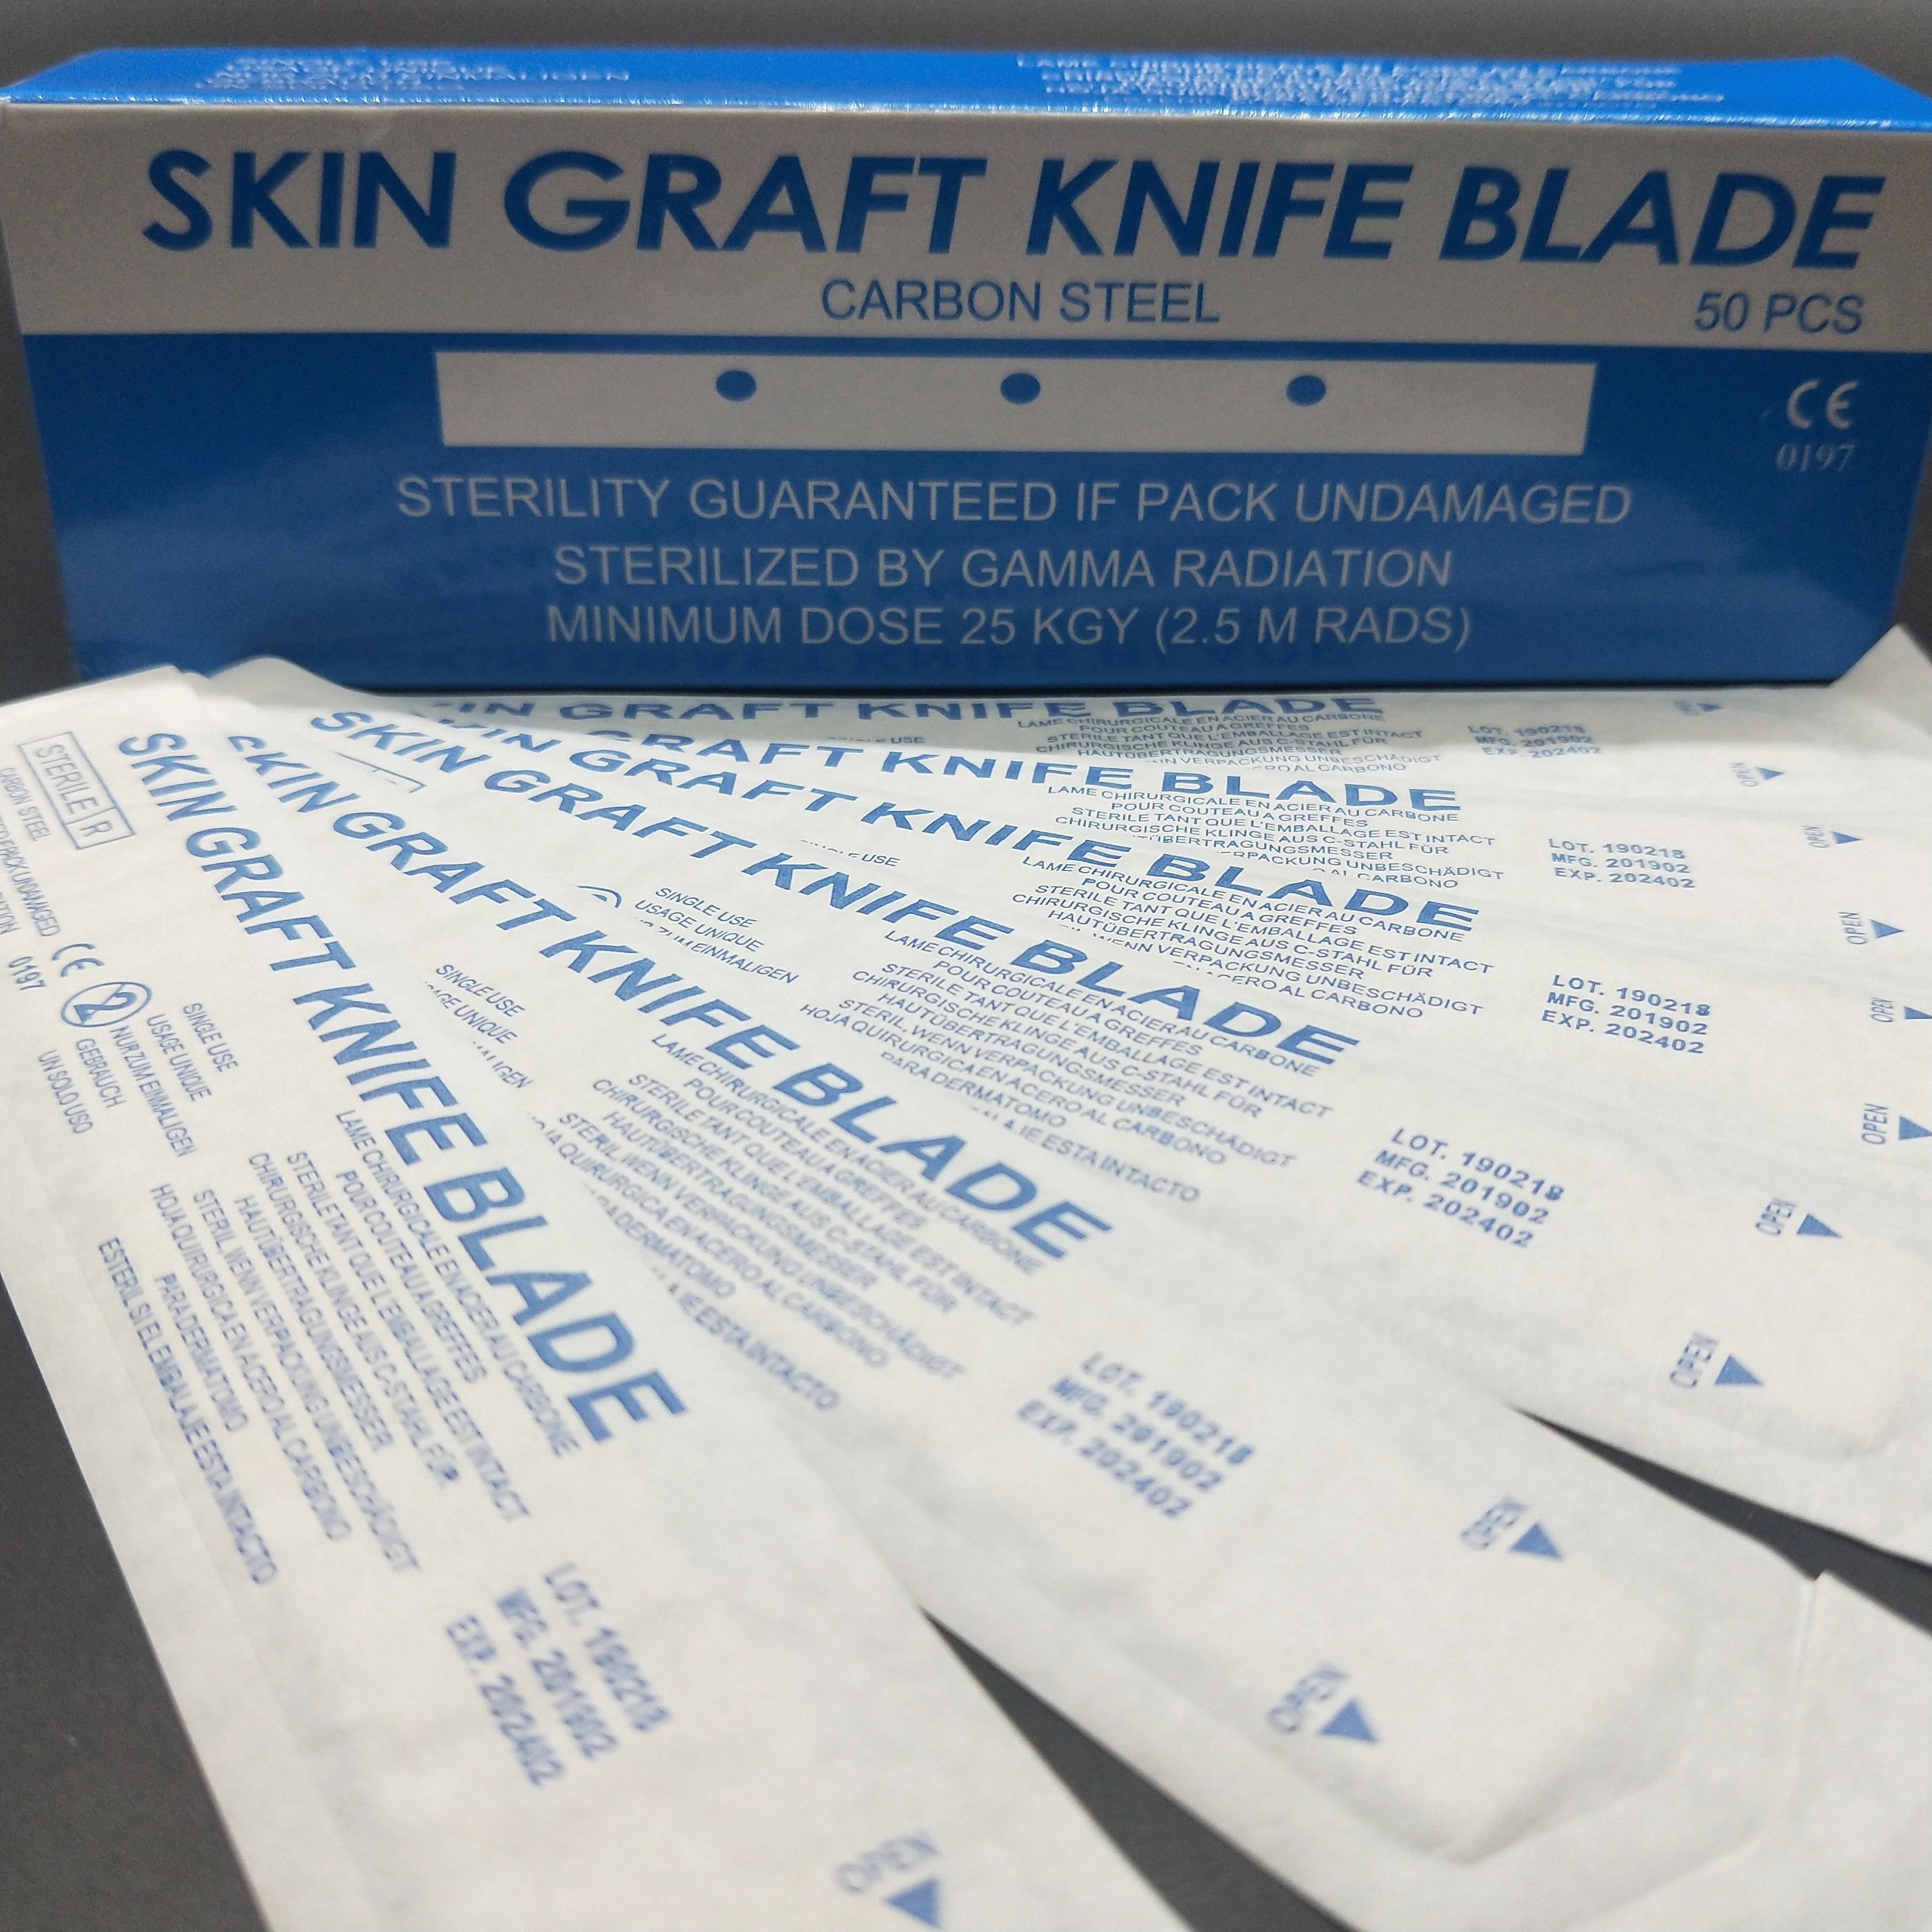 Skin graft knife blade for hospital use stainless steel